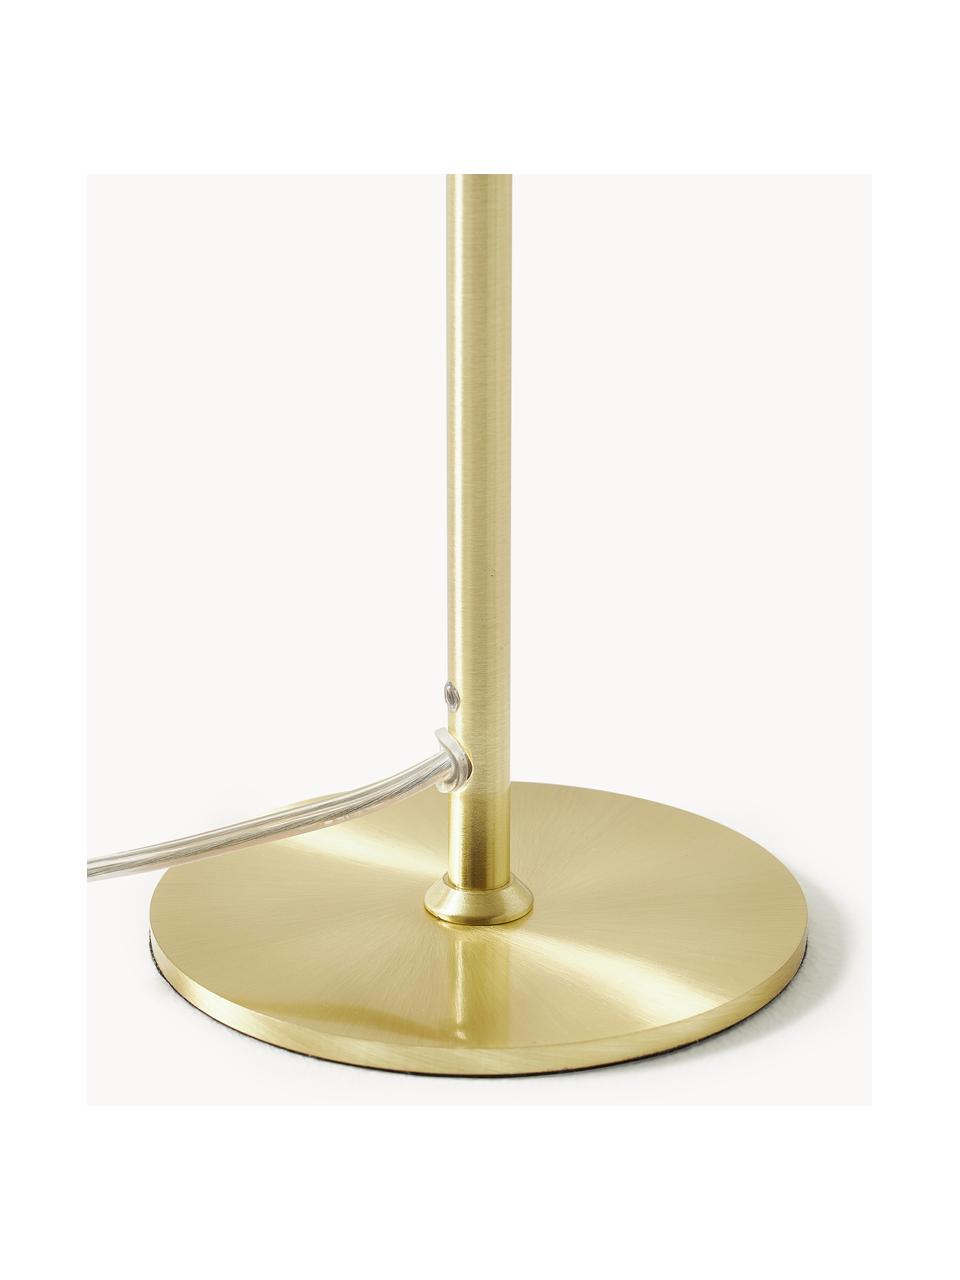 Lámpara de mesa Mathea, Pantalla: metal con pintura en polv, Cable: plástico, Blanco, dorado, Ø 23 x Al 36 cm